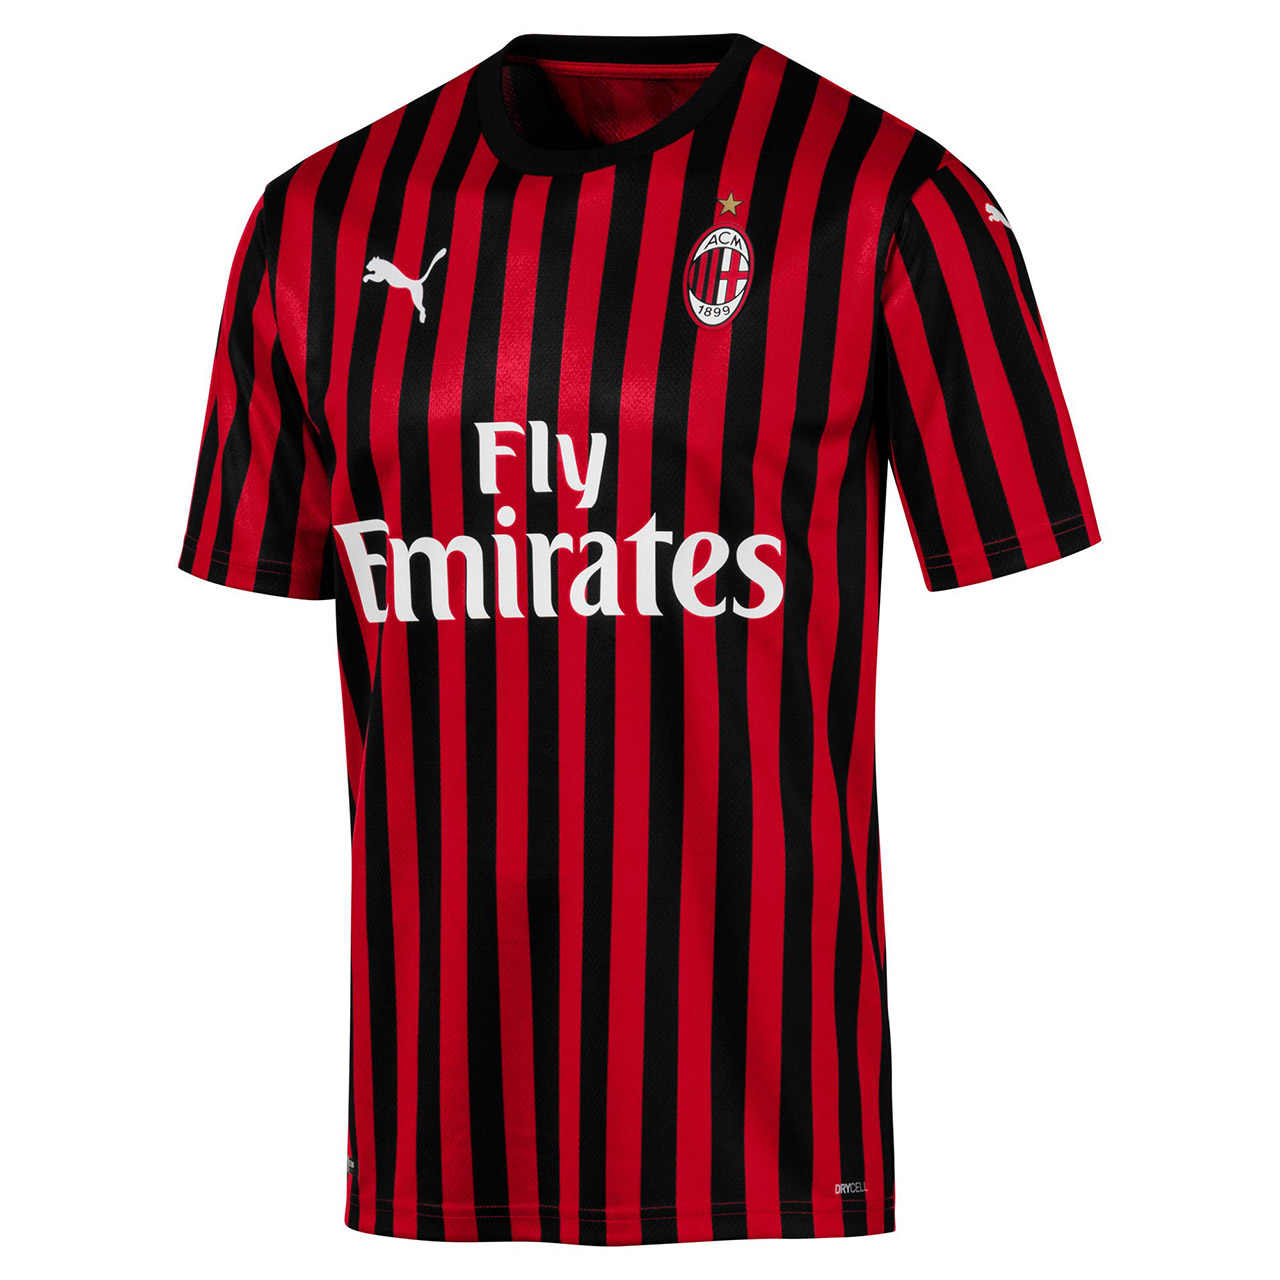 AC Milan 19-20 Home, Away & Third Kits Released - Footy Headlines